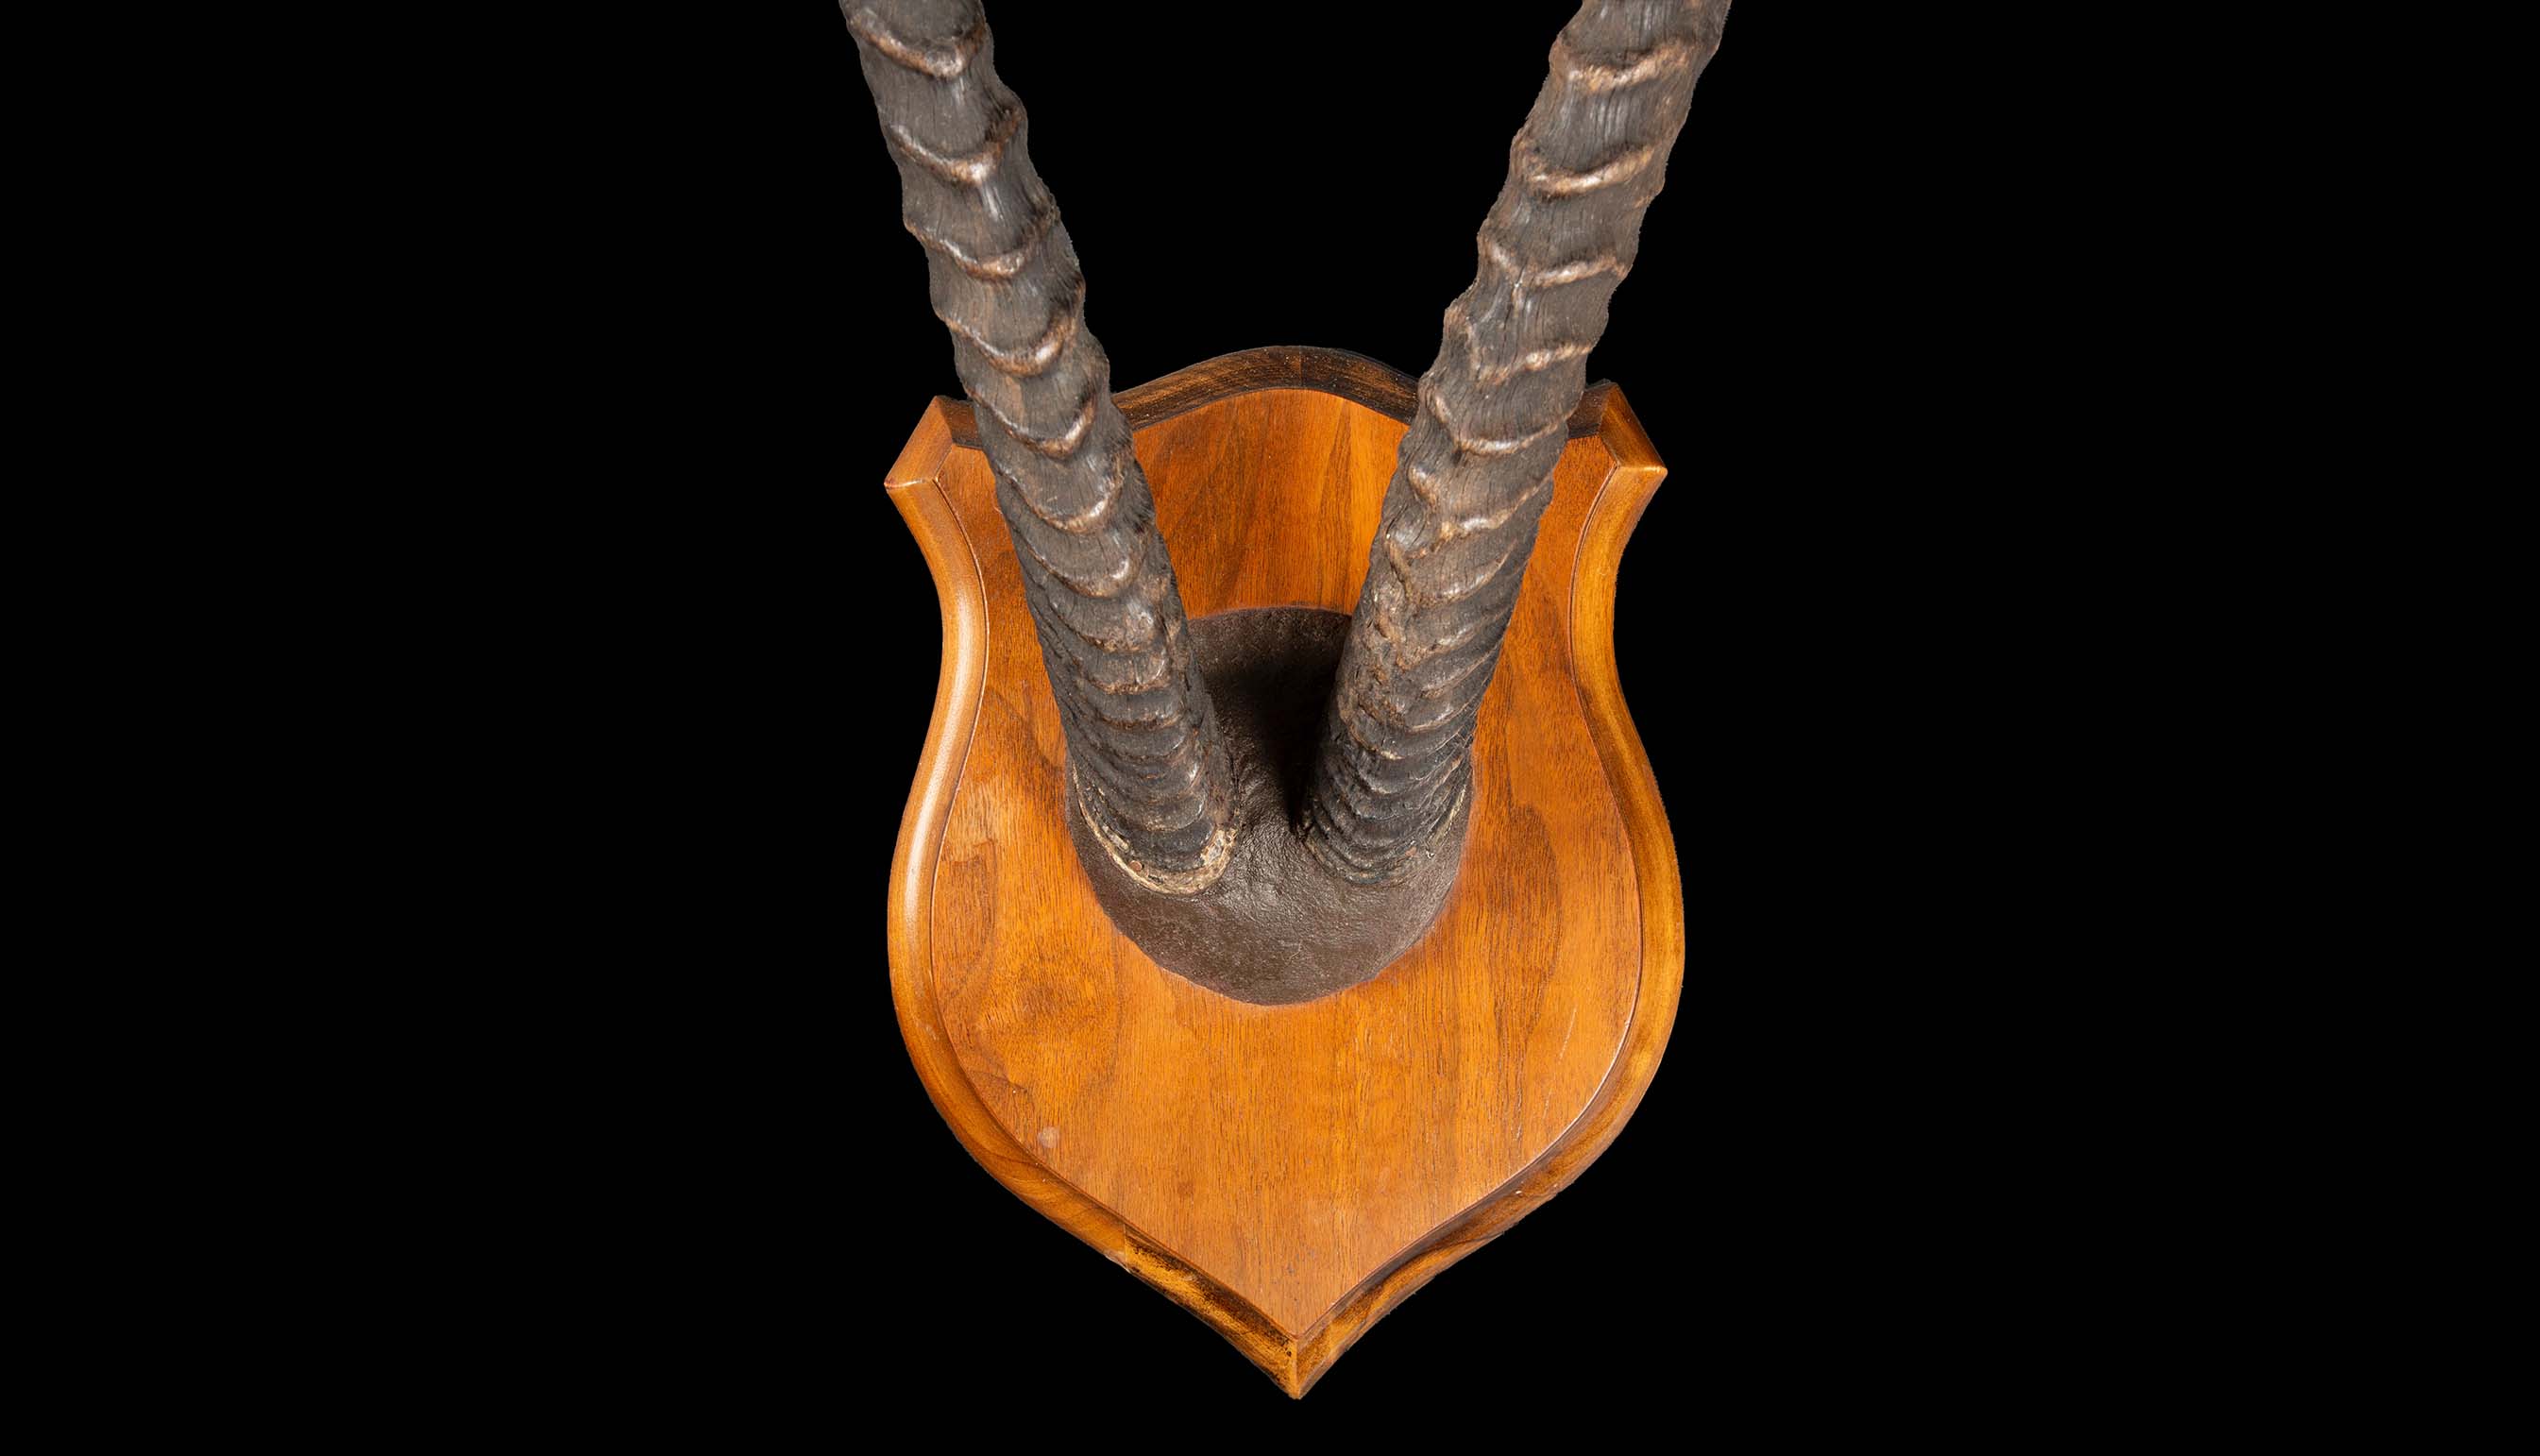 Plaque Mounted Gazelle Horns